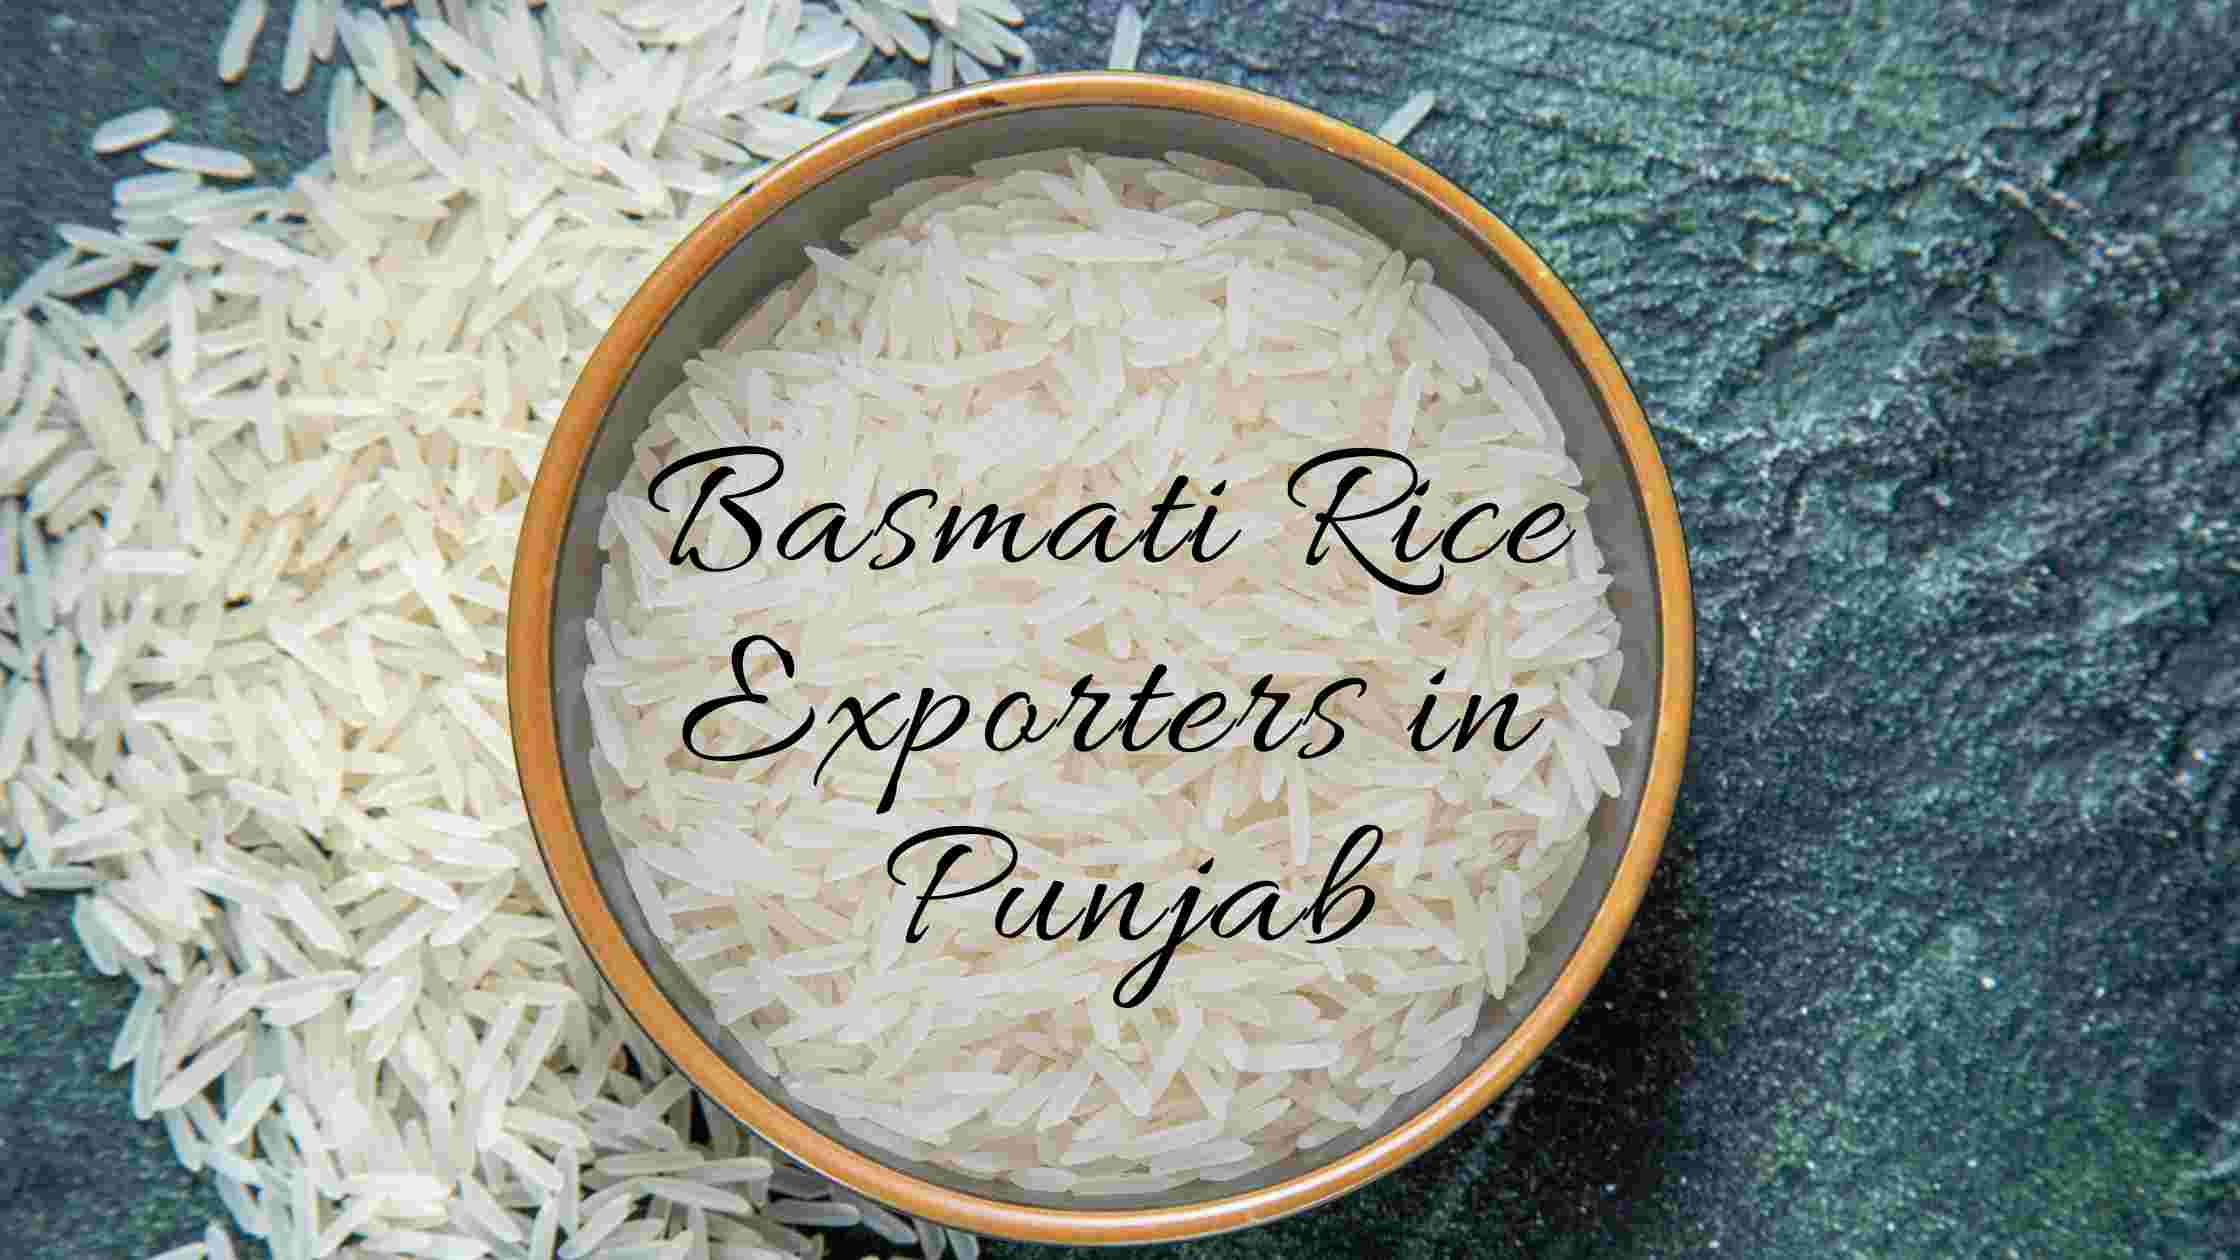 Basmati Rice Exporters in Punjab